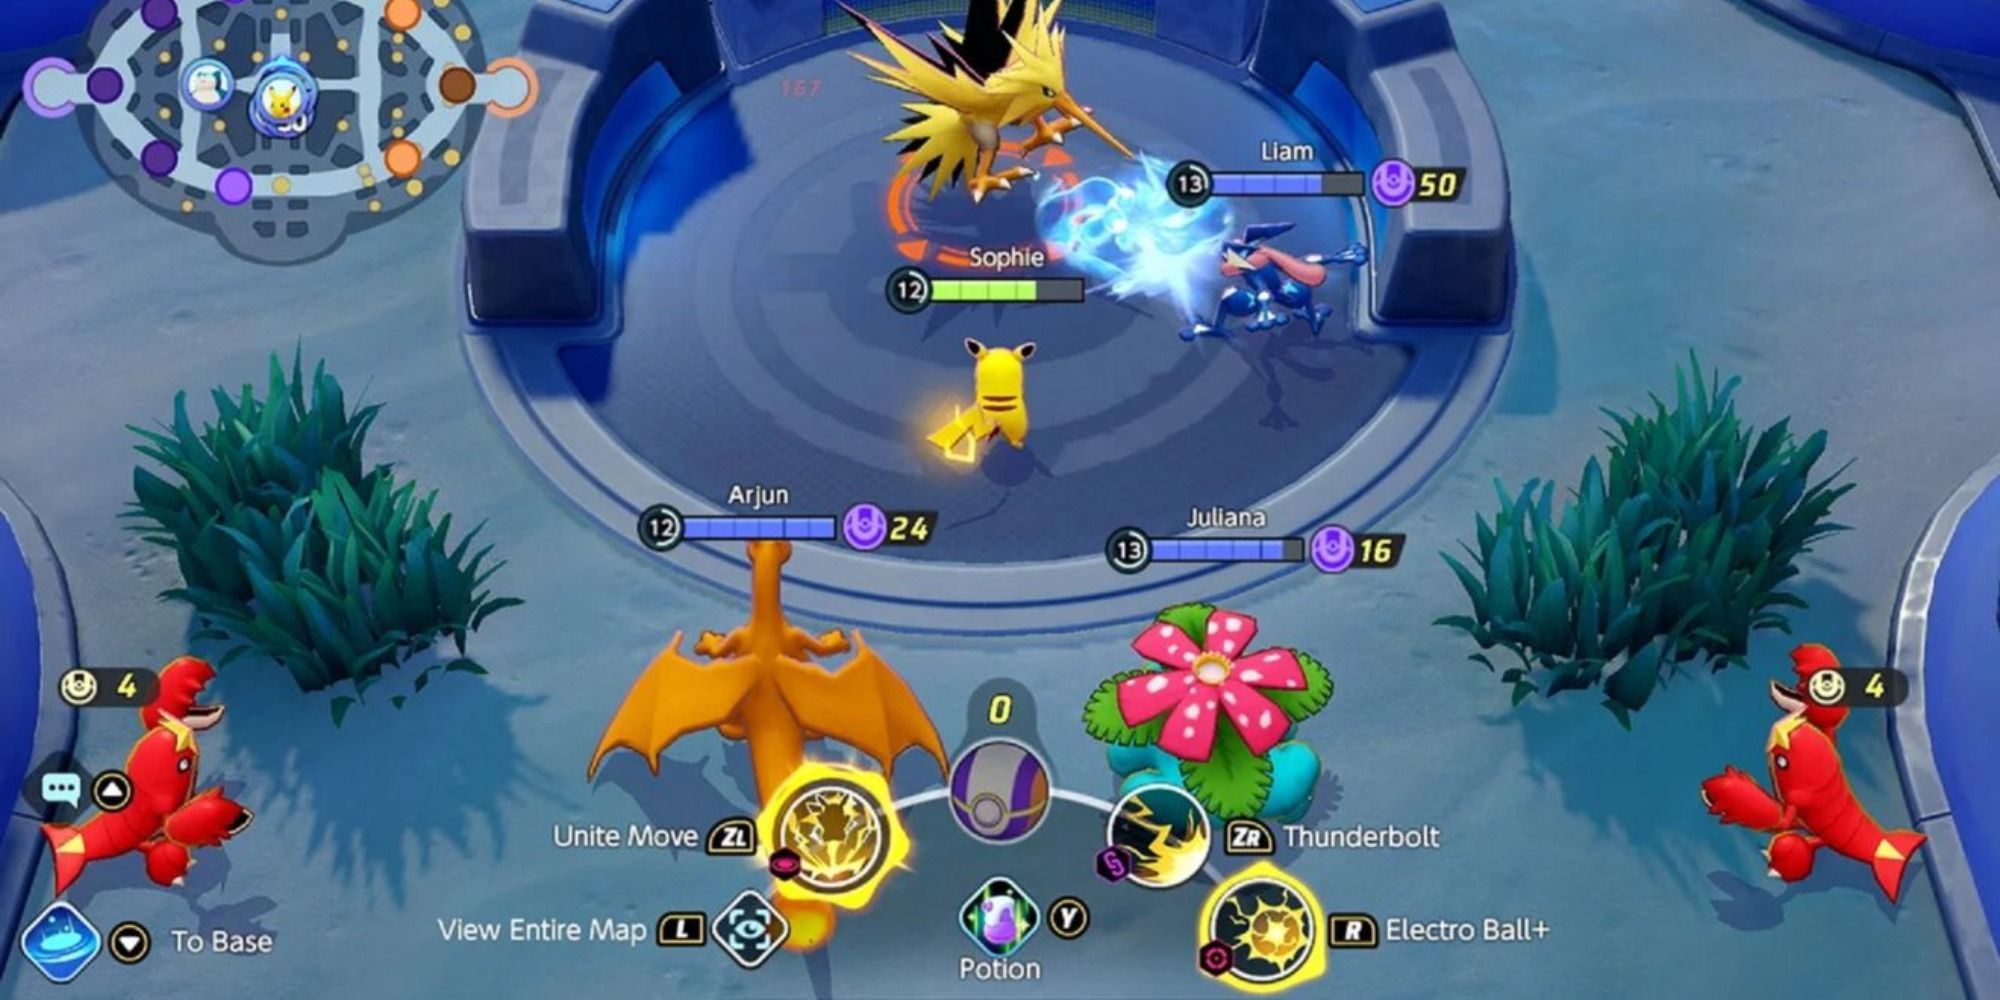 A screenshot showing gameplay in Pokemon Unite